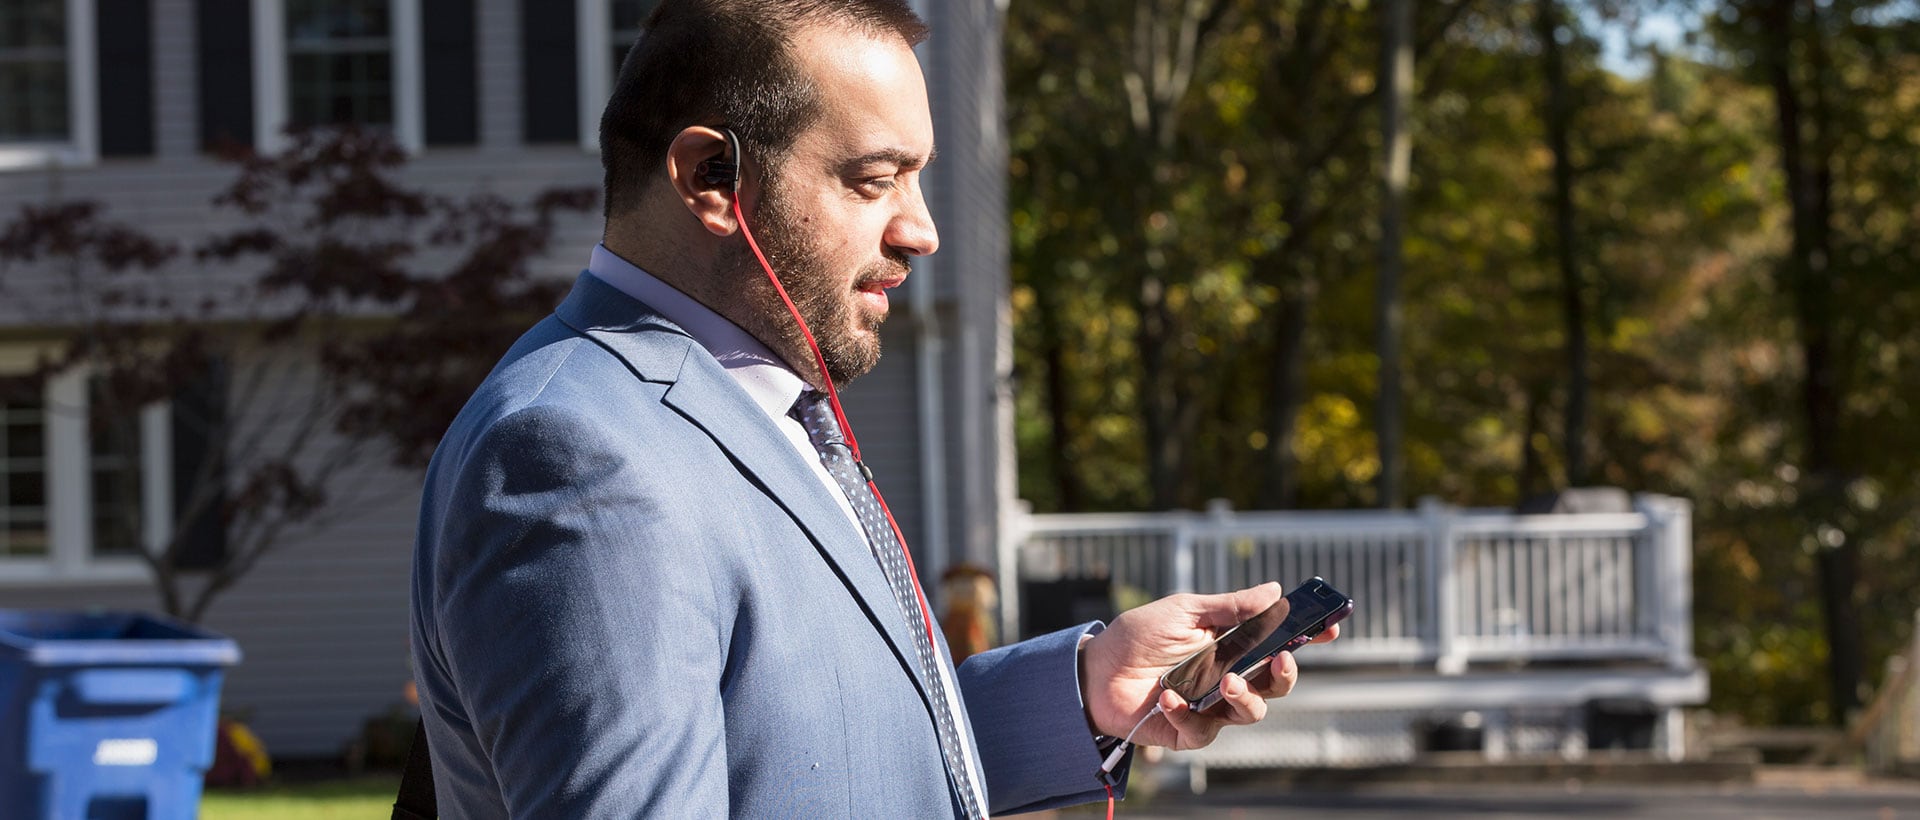 man wearing headphones outside